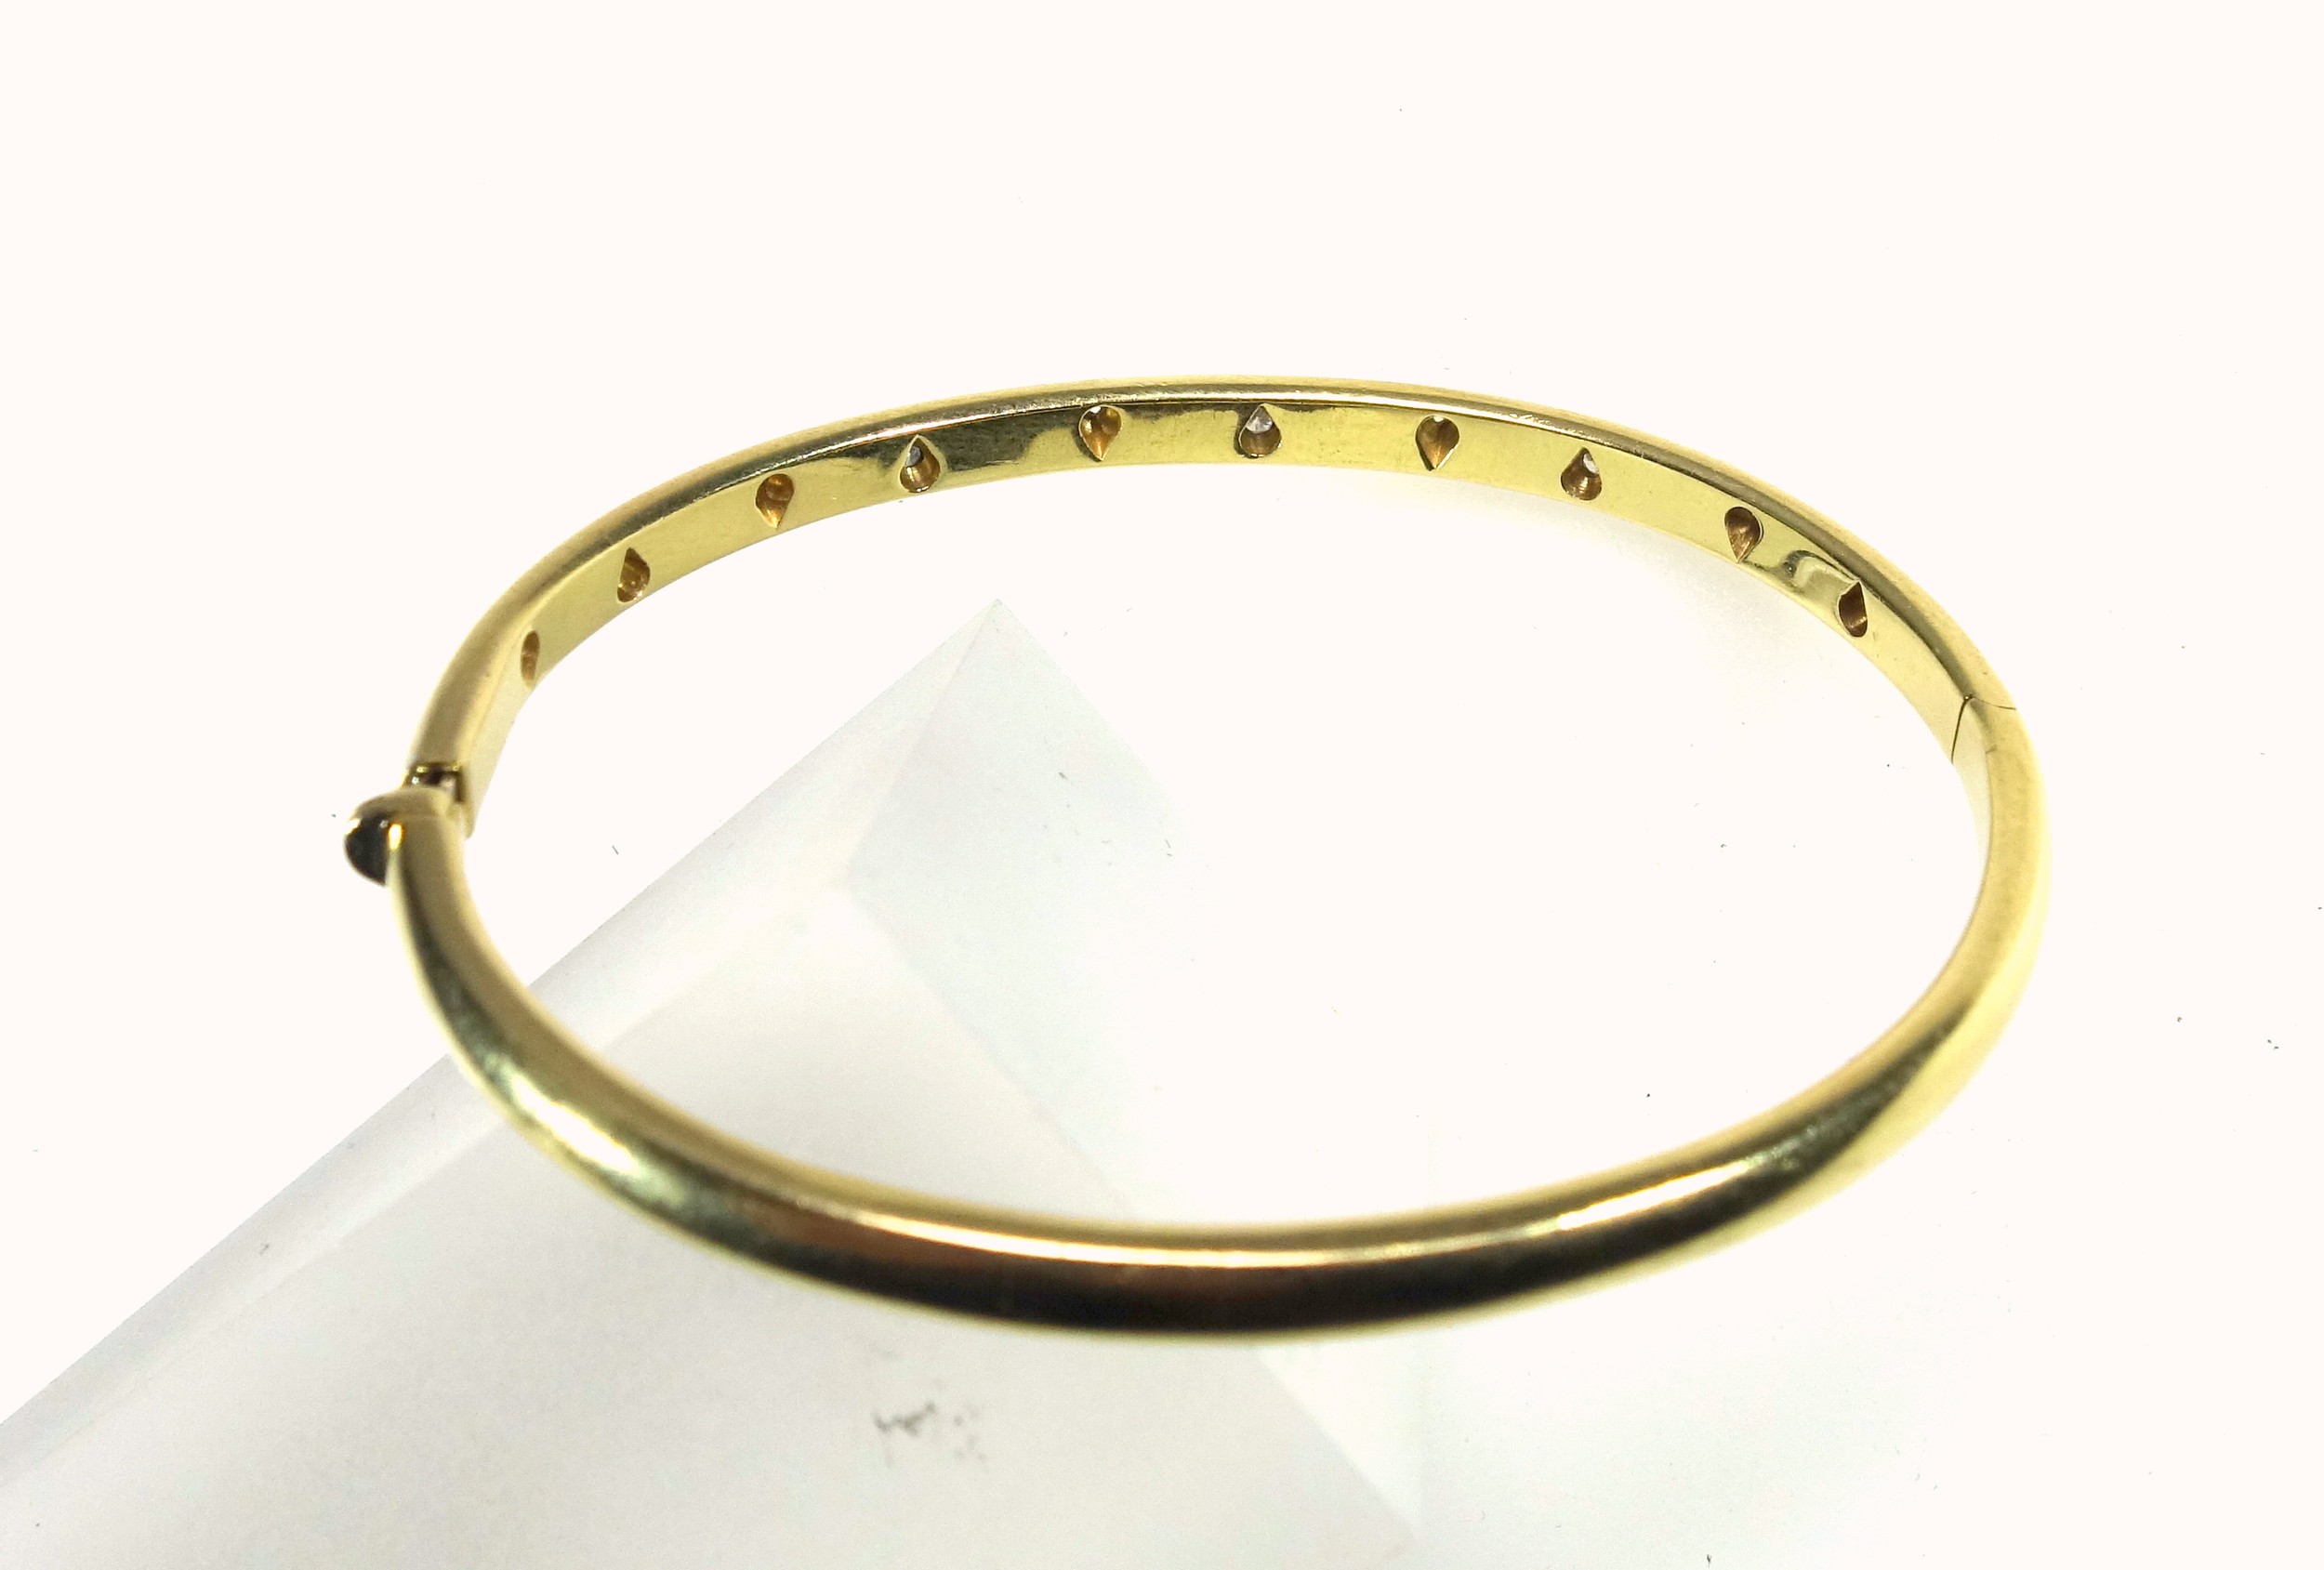 Tiffany & Co., 18ct gold and platinum, brilliant-cut diamond Etoile hinged bracelet - Image 3 of 4